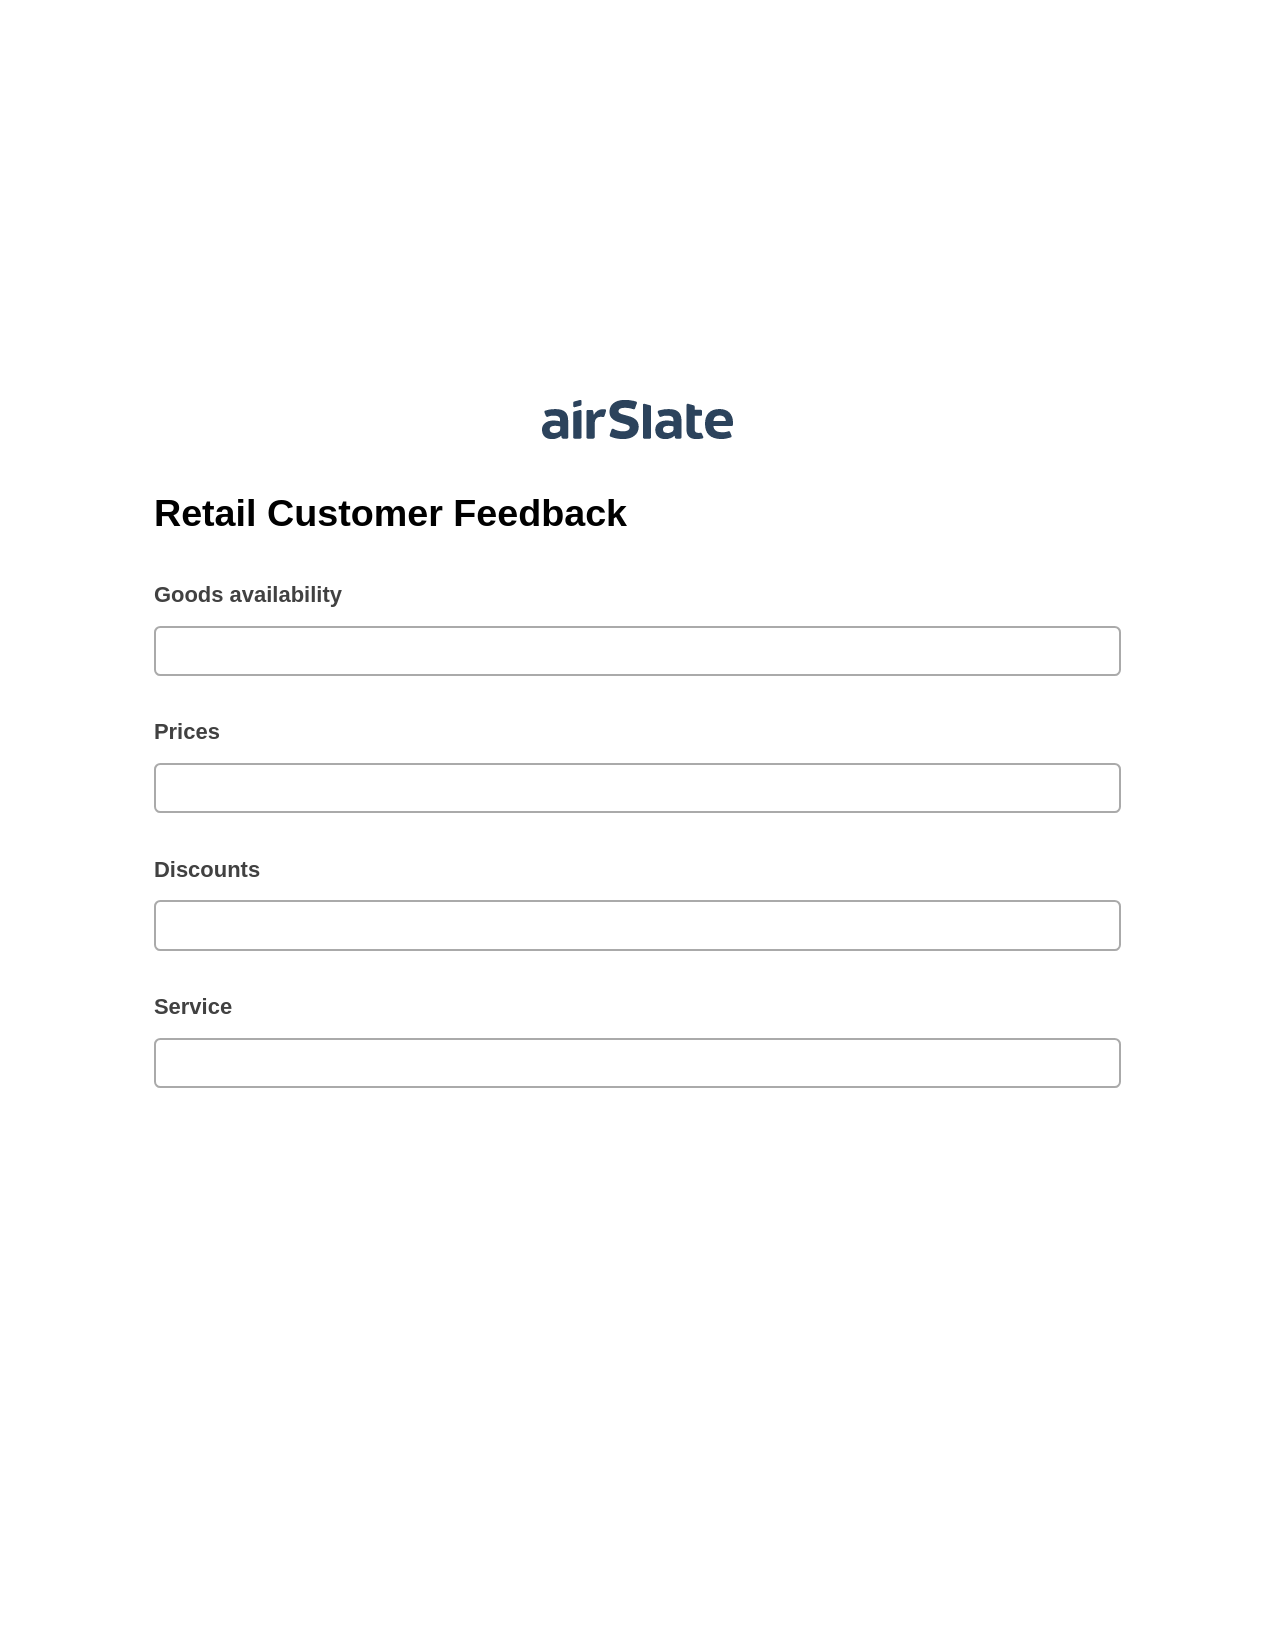 Retail Customer Feedback Pre-fill from CSV File Bot, Slack Notification Bot, Dropbox Bot